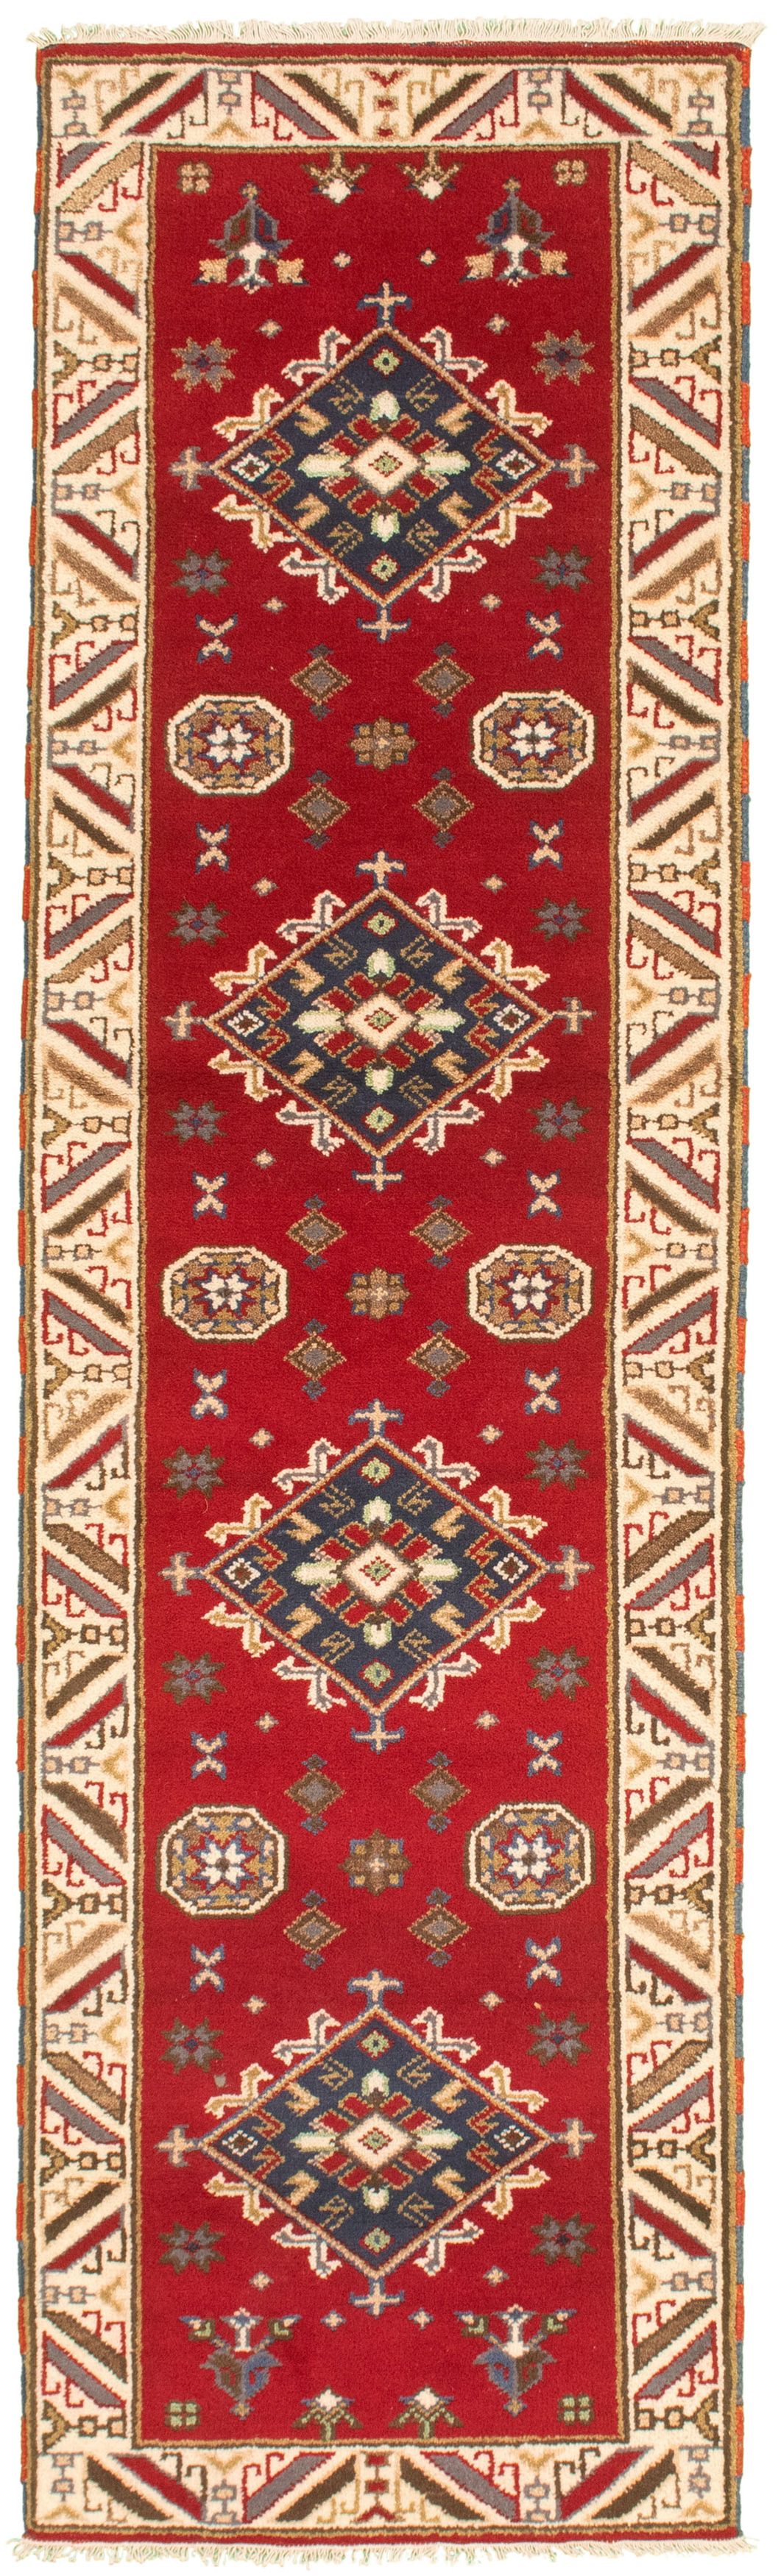 Hand-knotted Royal Kazak Dark Red Wool Rug 2'9" x 9'9"  Size: 2'9" x 9'9"  